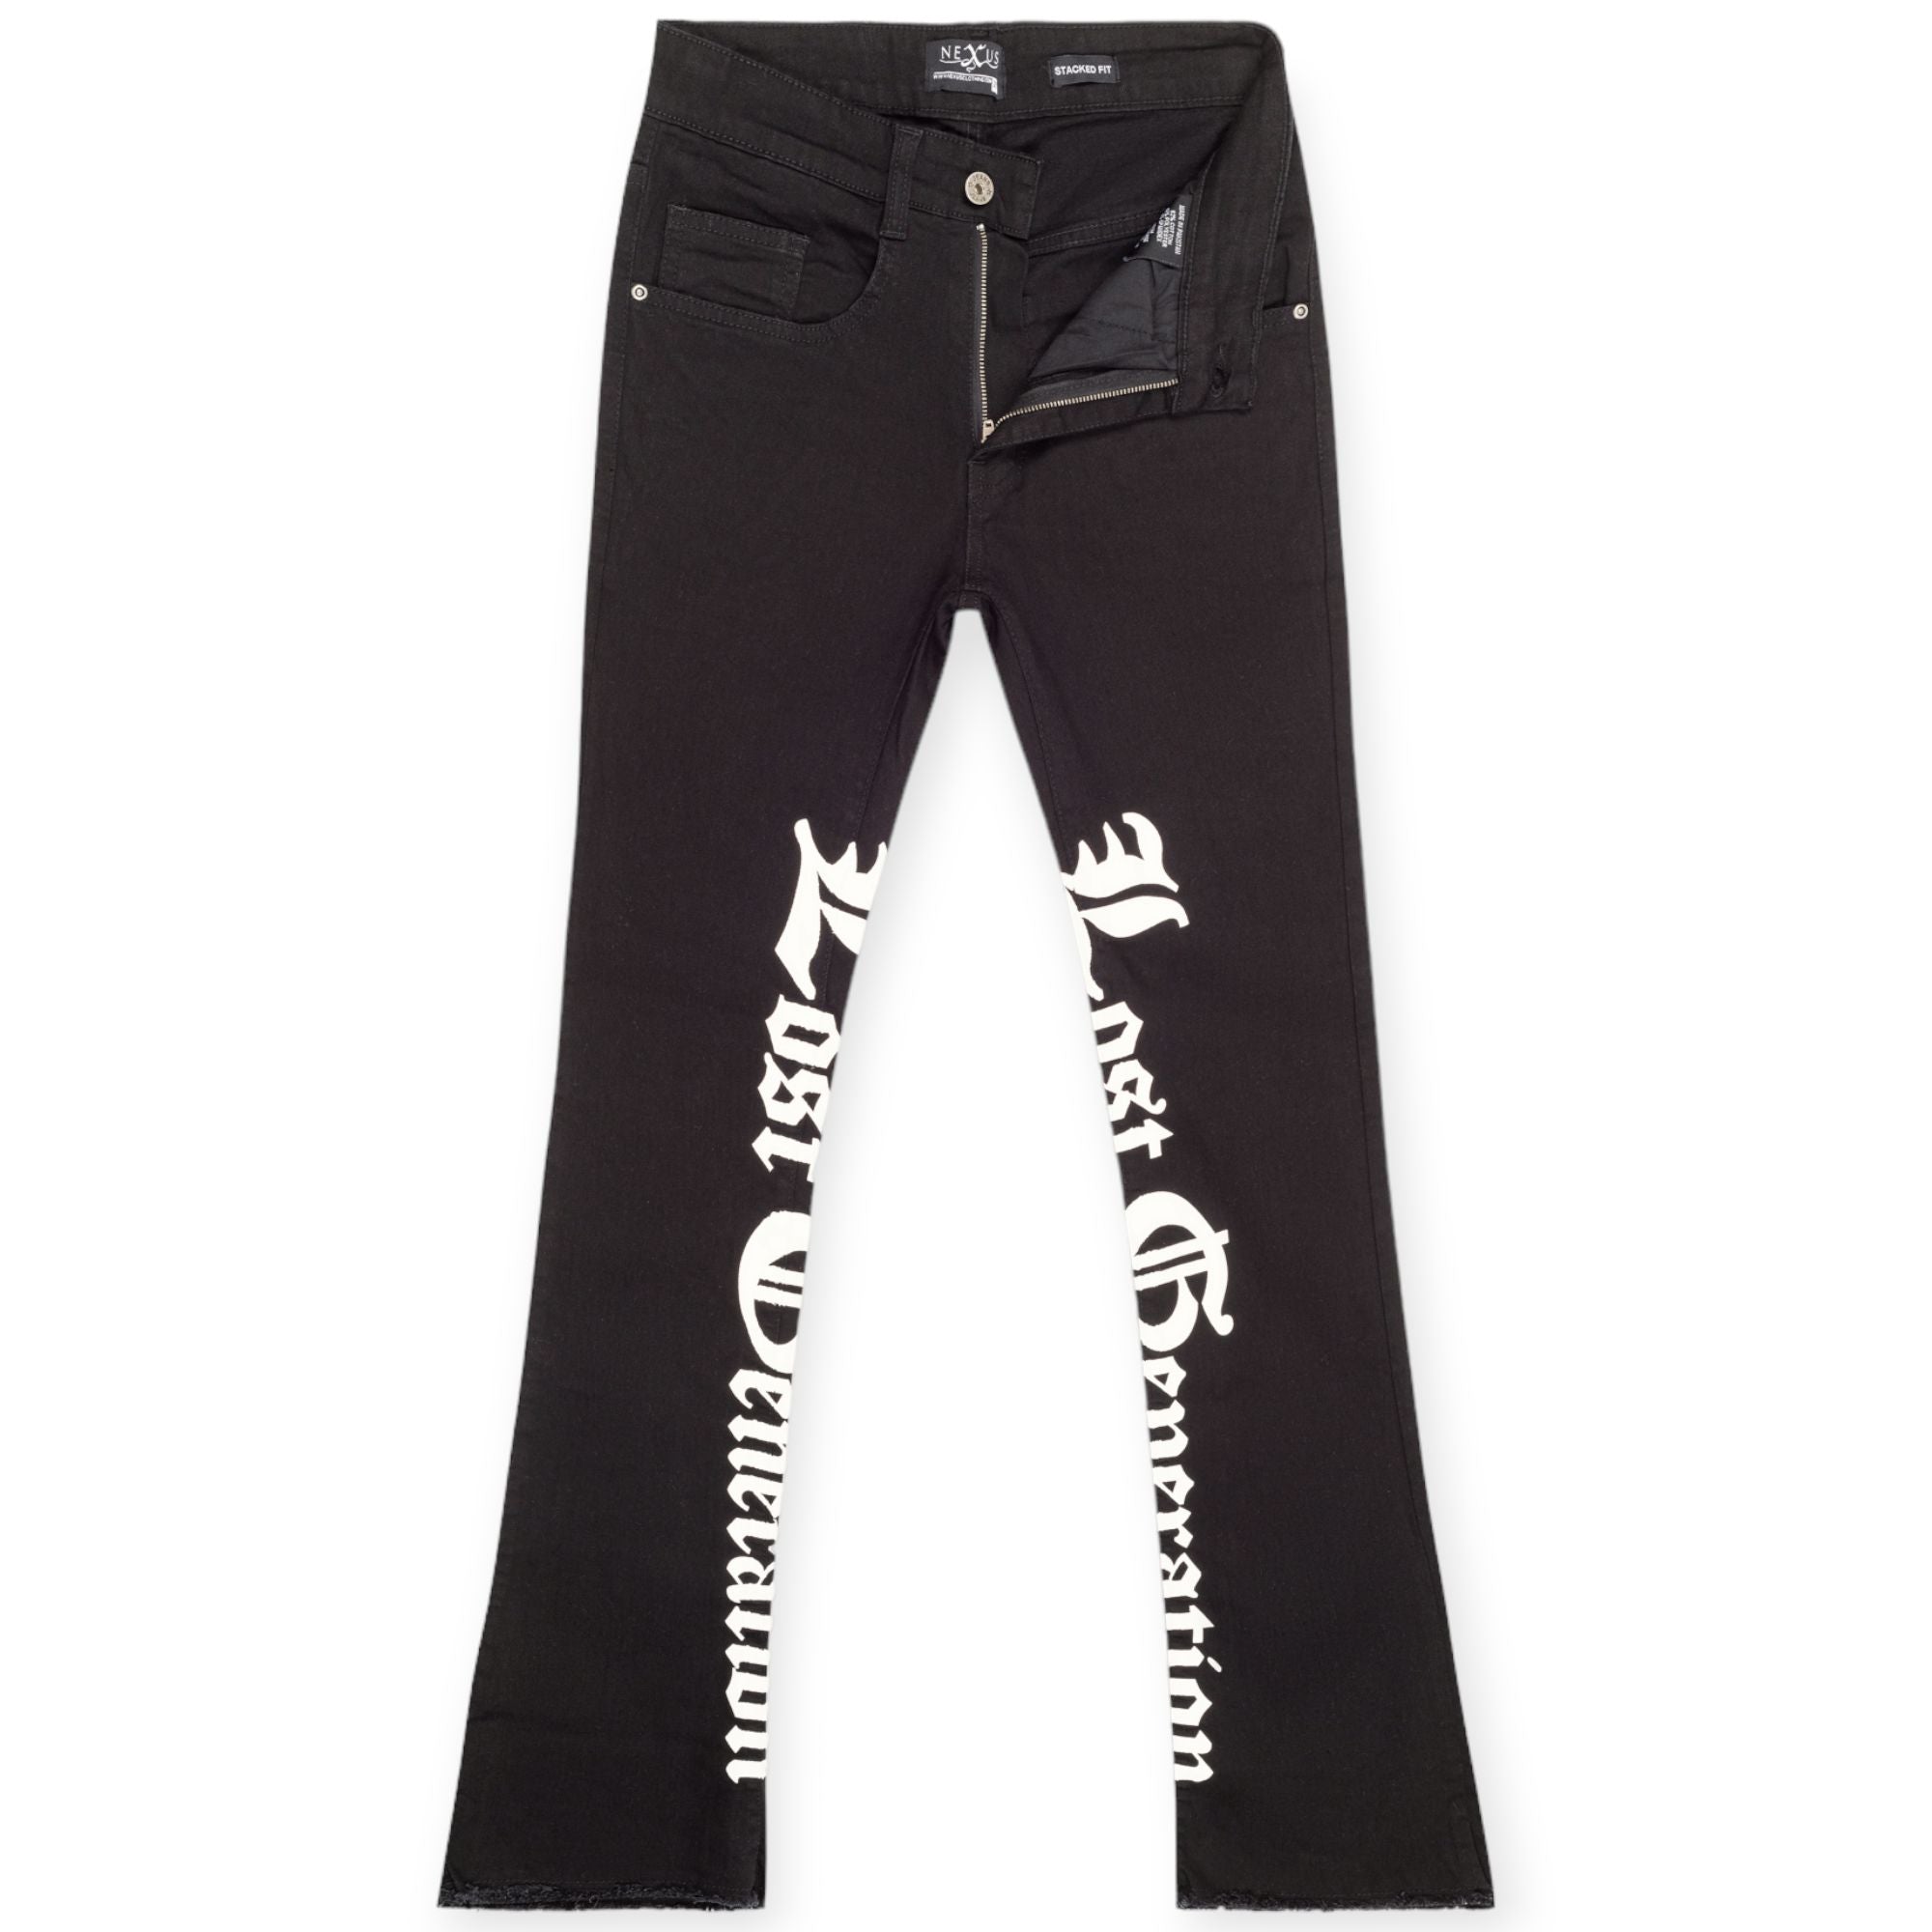 Nexus Clothing Men Lost Generation Stacked Fit Jeans(Black White)-Black White-32W X 36L-Nexus Clothing